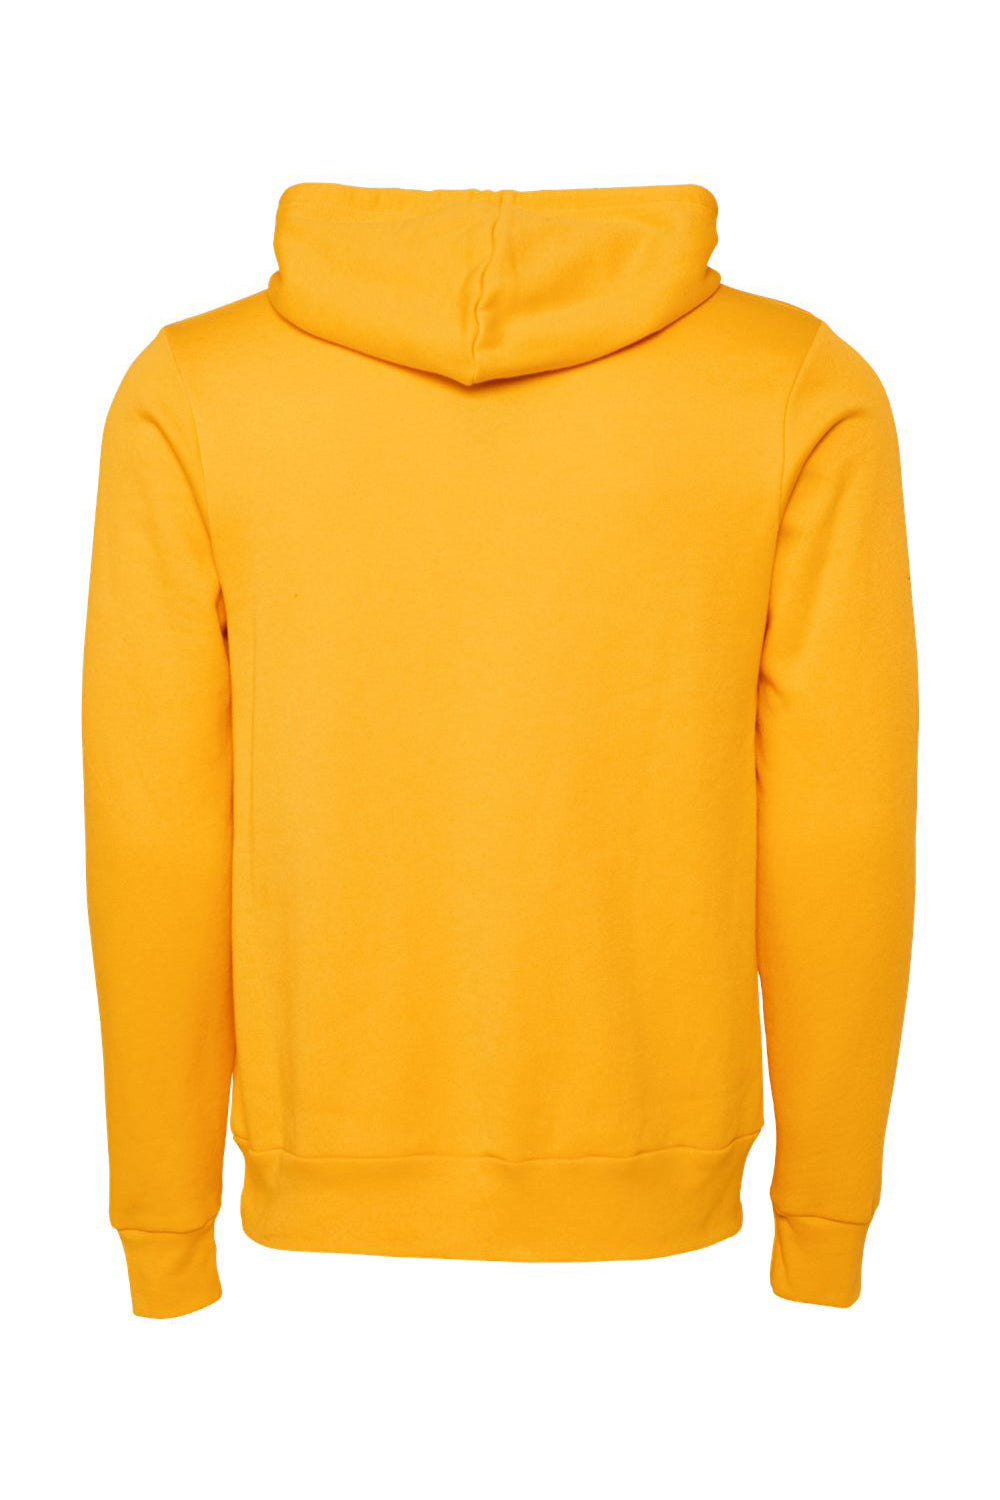 Bella + Canvas BC3719/3719 Mens Sponge Fleece Hooded Sweatshirt Hoodie Gold Flat Back